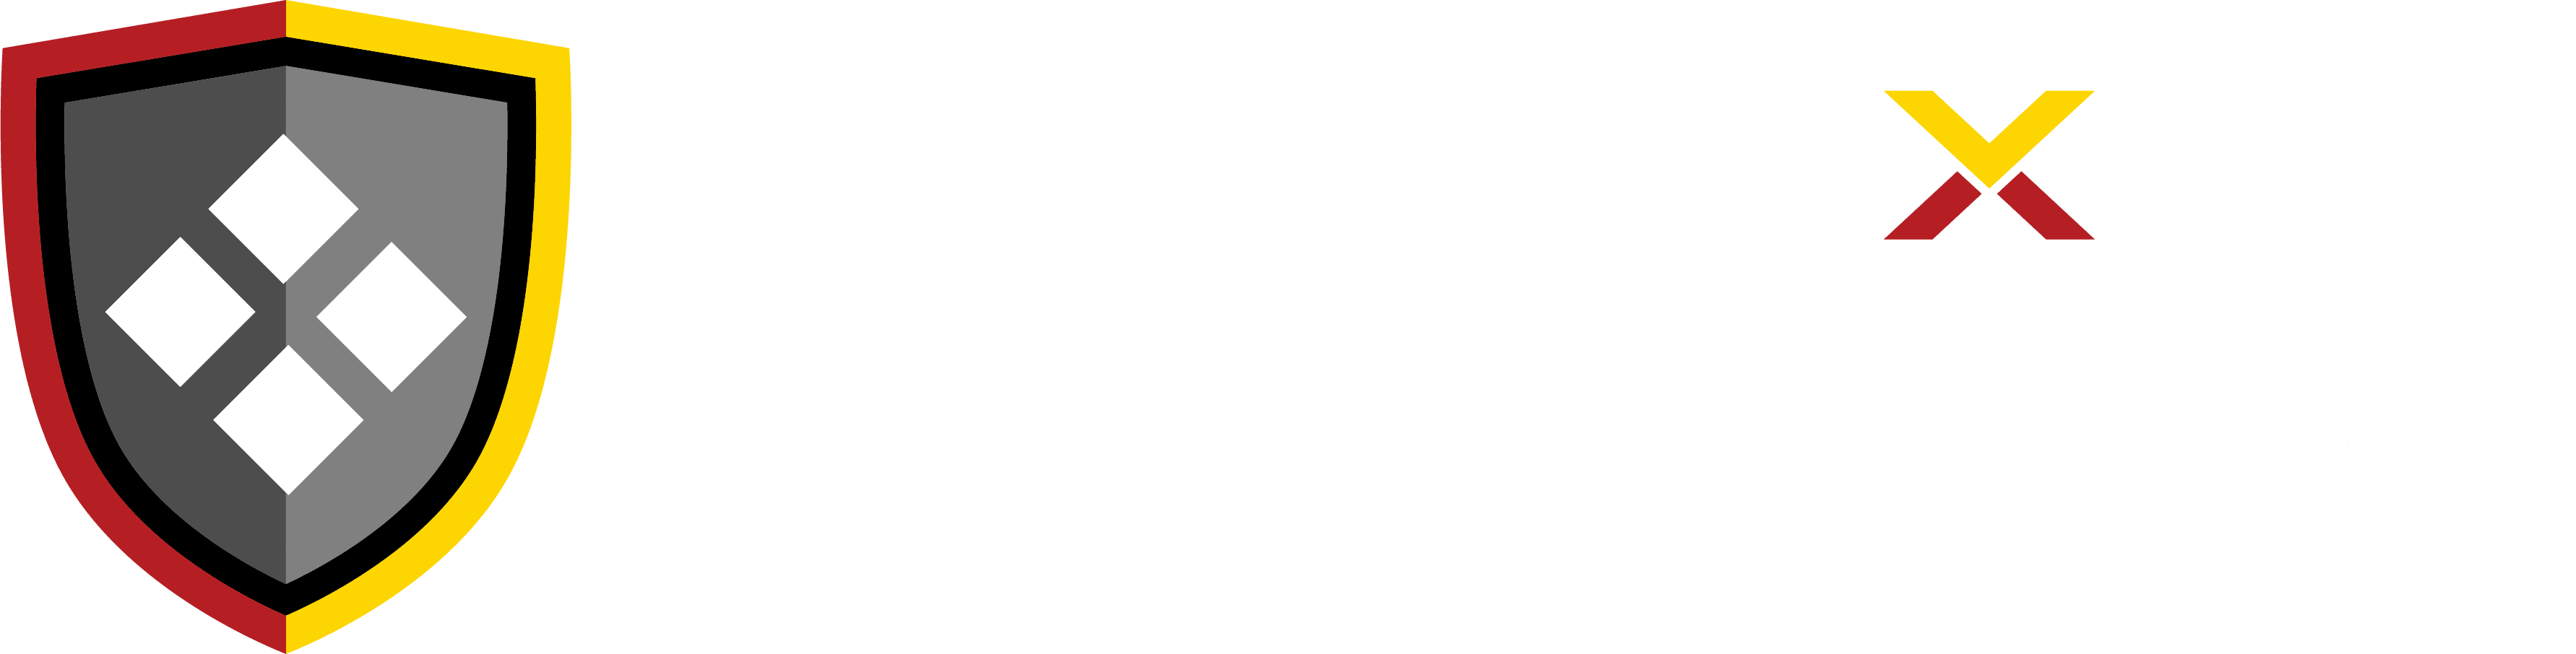 virnetx matrix logo